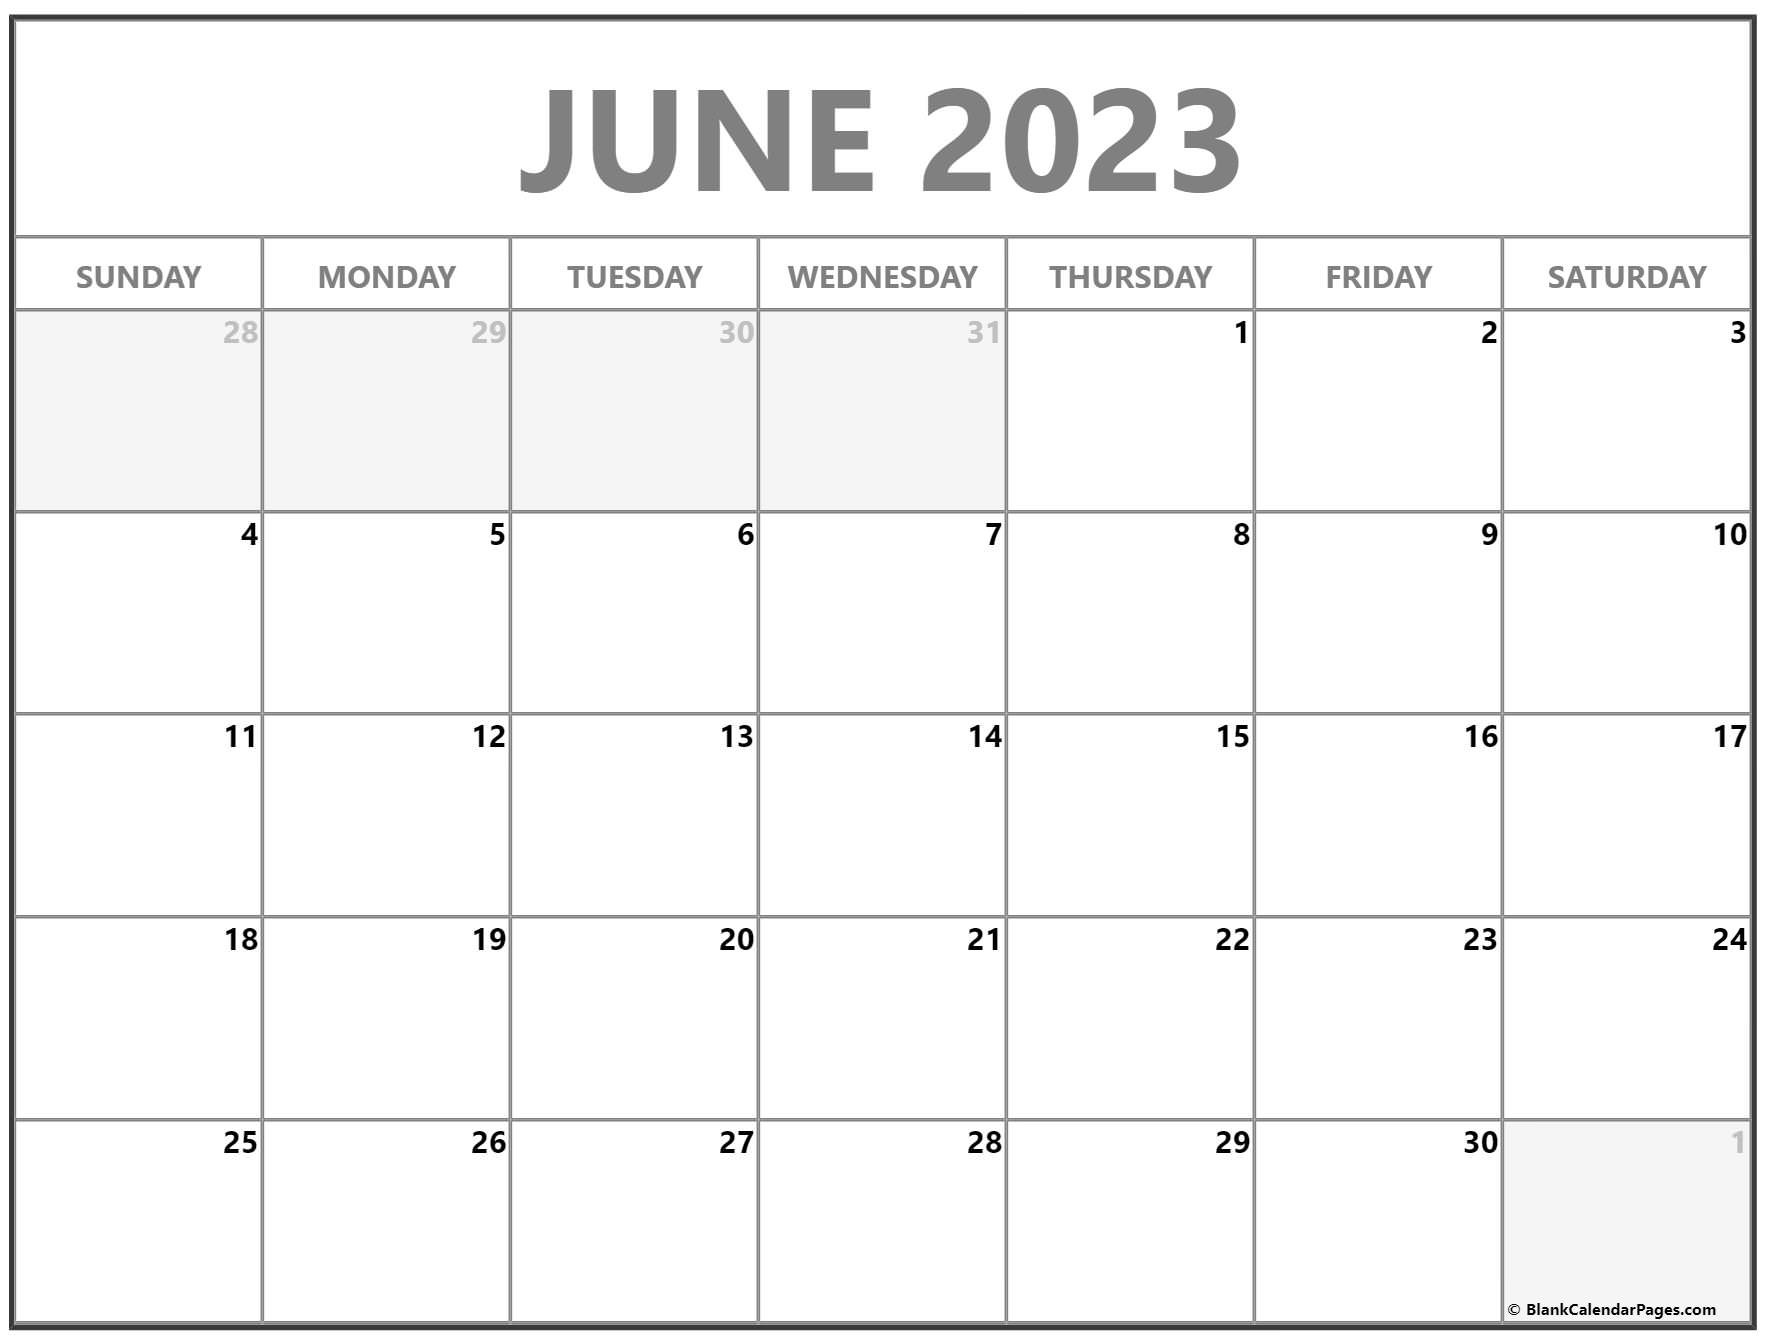 Free Printable Blank Calendar Juune 2023 2023 - FreeBlankCalendar.com